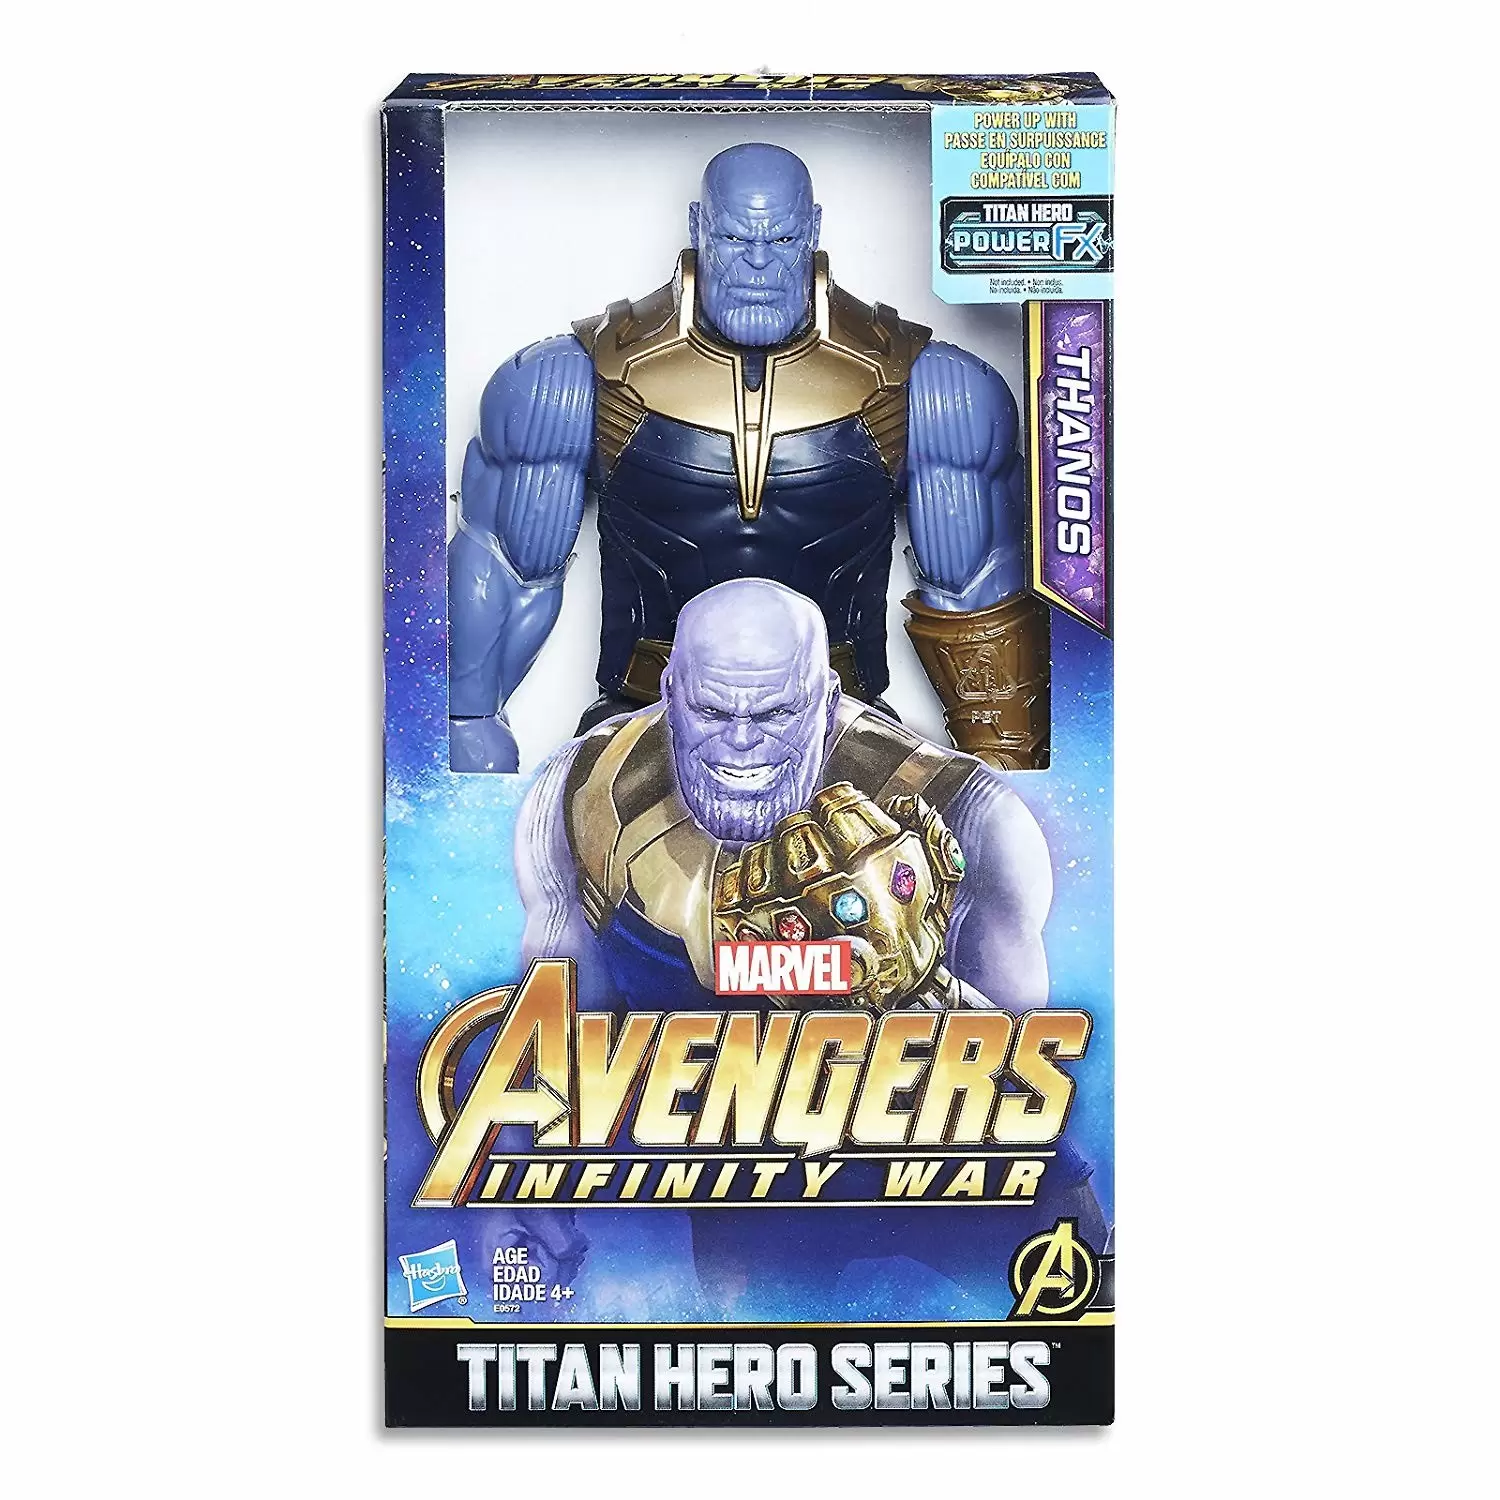 Titan Hero Series - Thanos Power FX - Avengers Infinity War